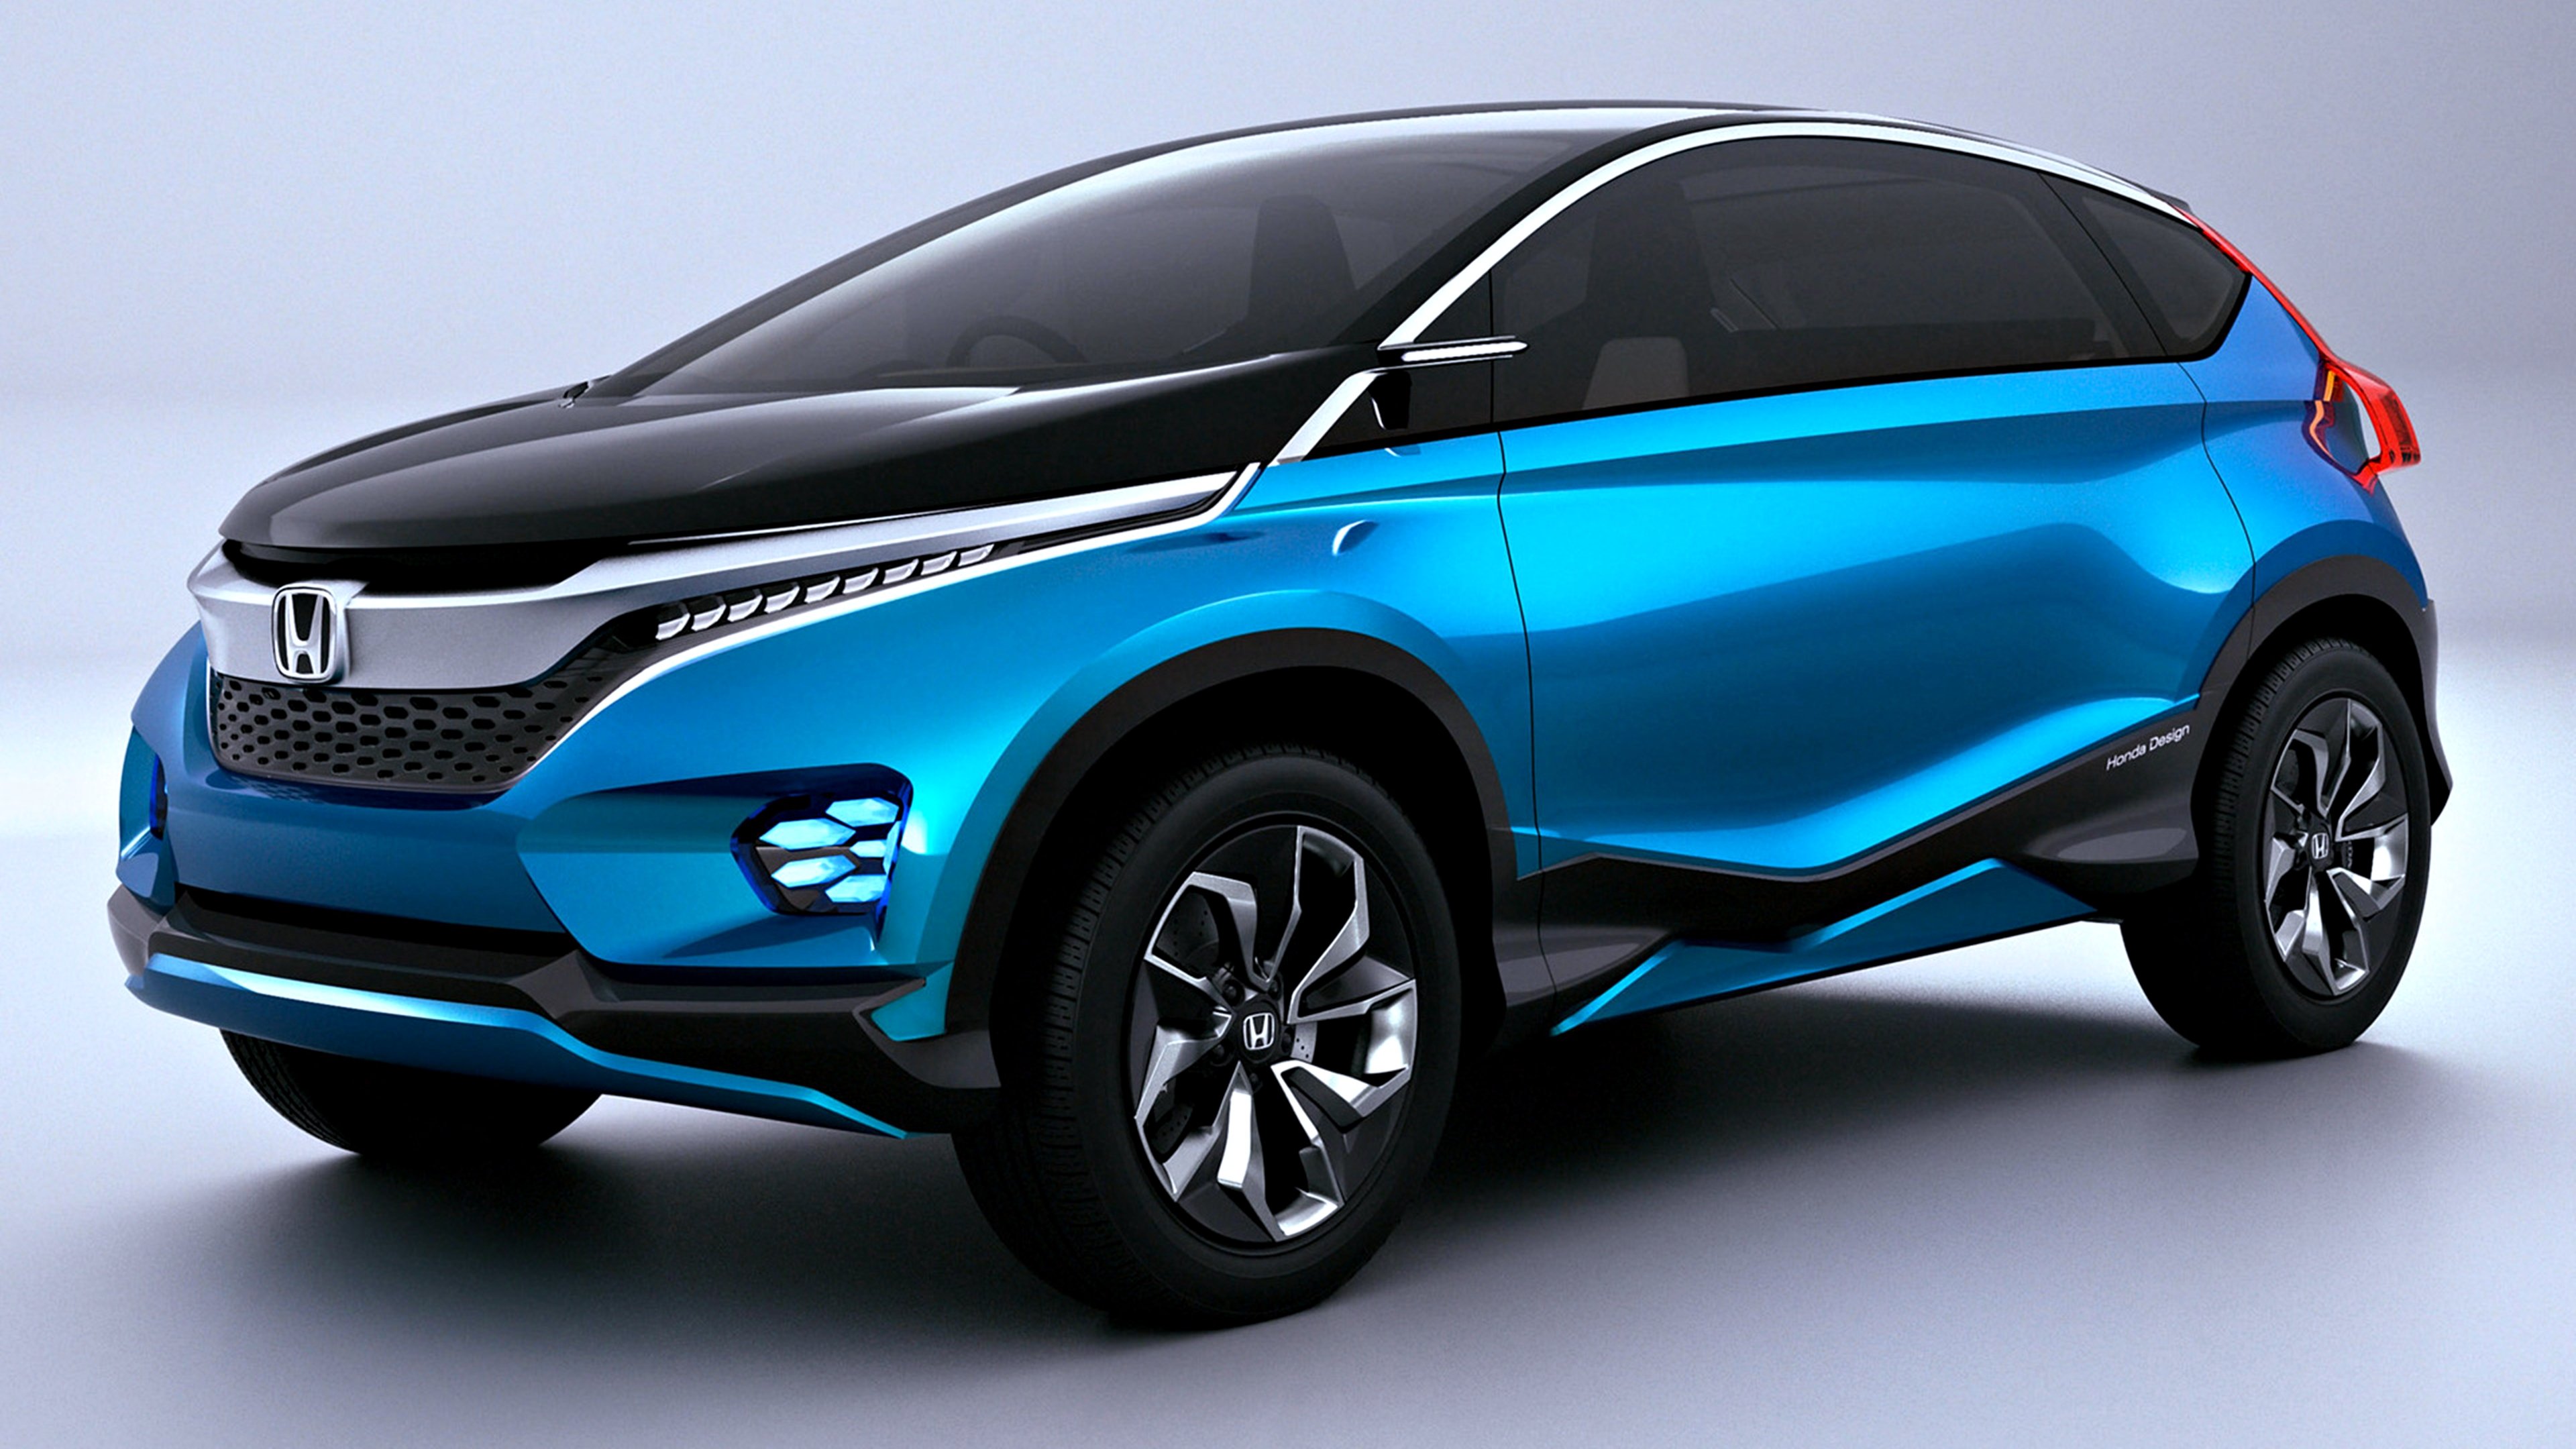 2014, Honda, Vision, Xs 1, Concept, Blue, 4x4, Speed, Motors, Cars, Auto Wallpaper